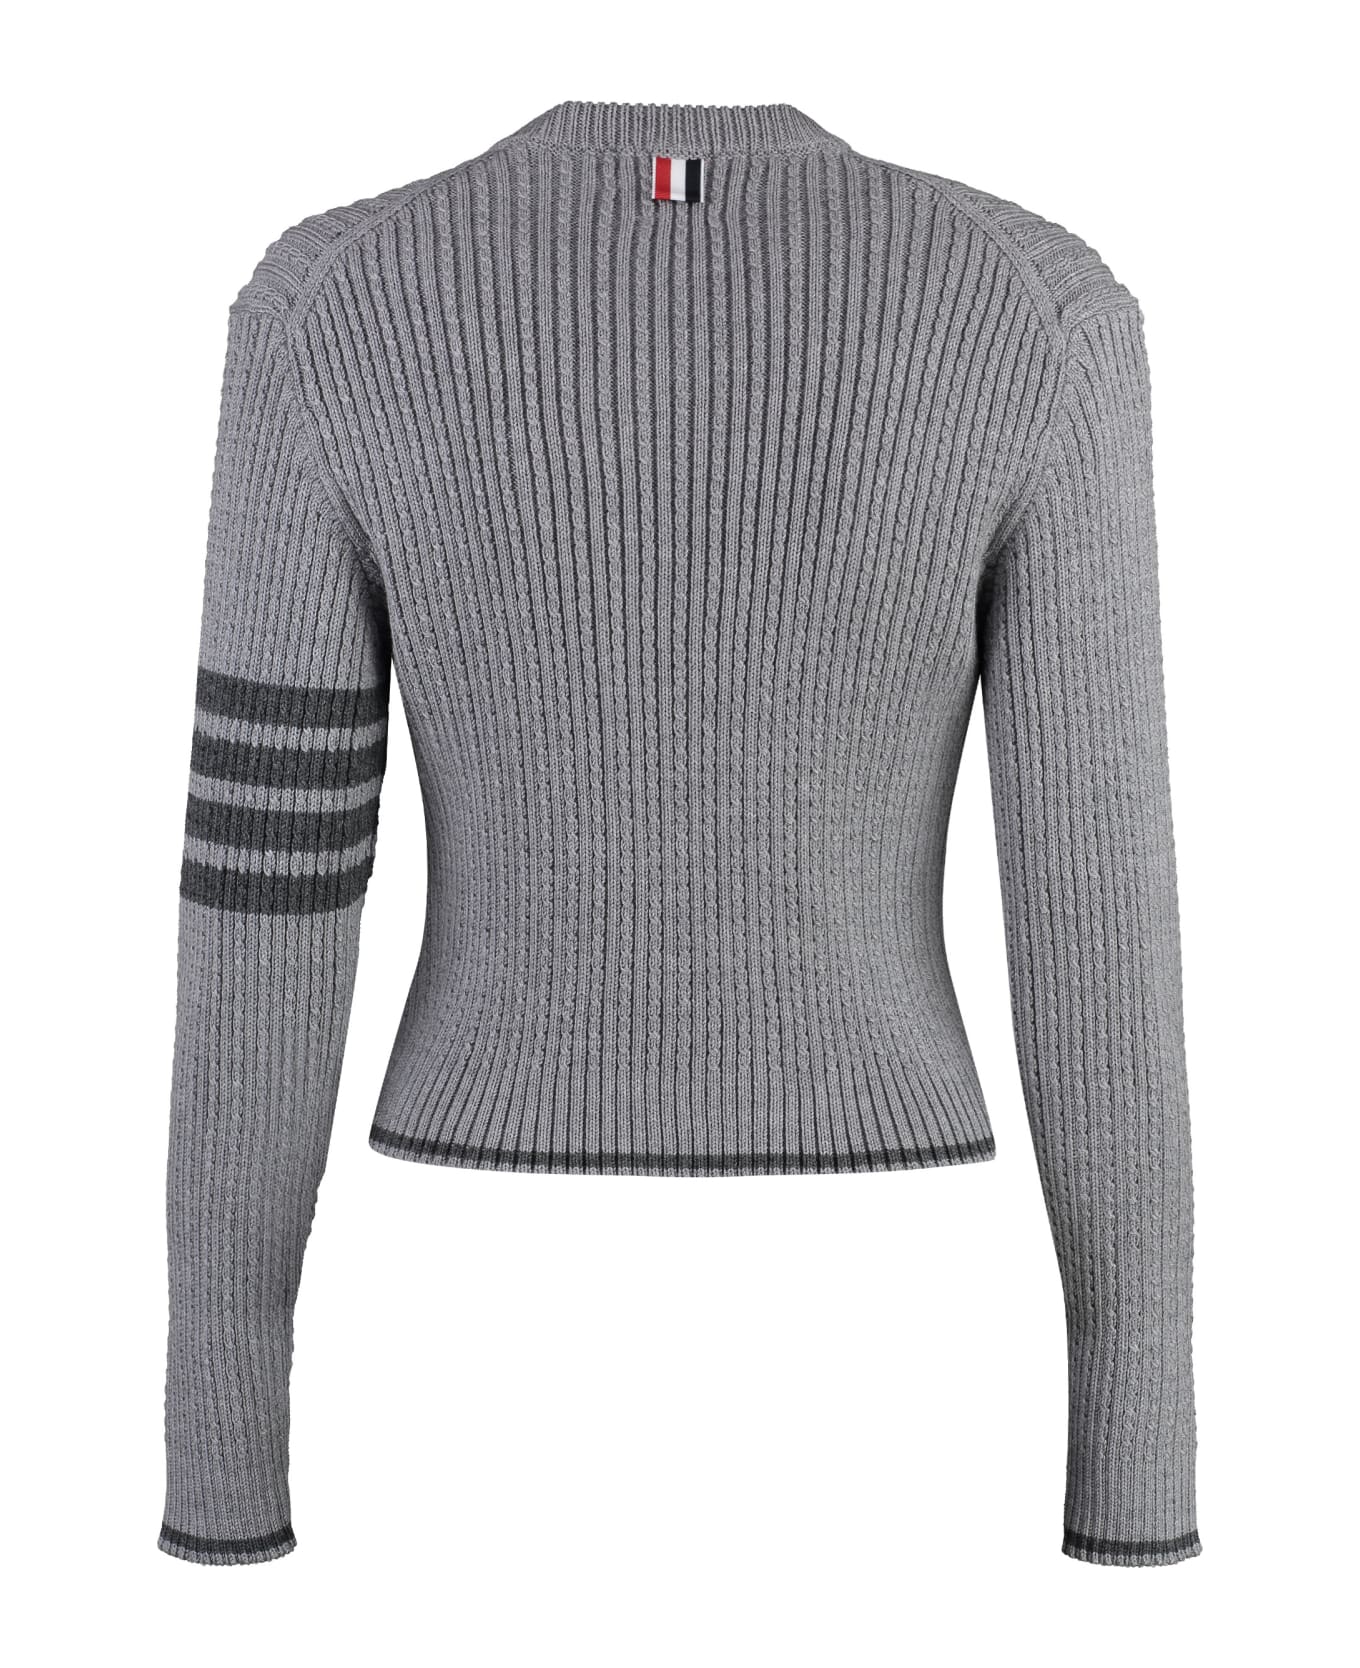 Thom Browne Virgin Wool Sweater - grey ニットウェア